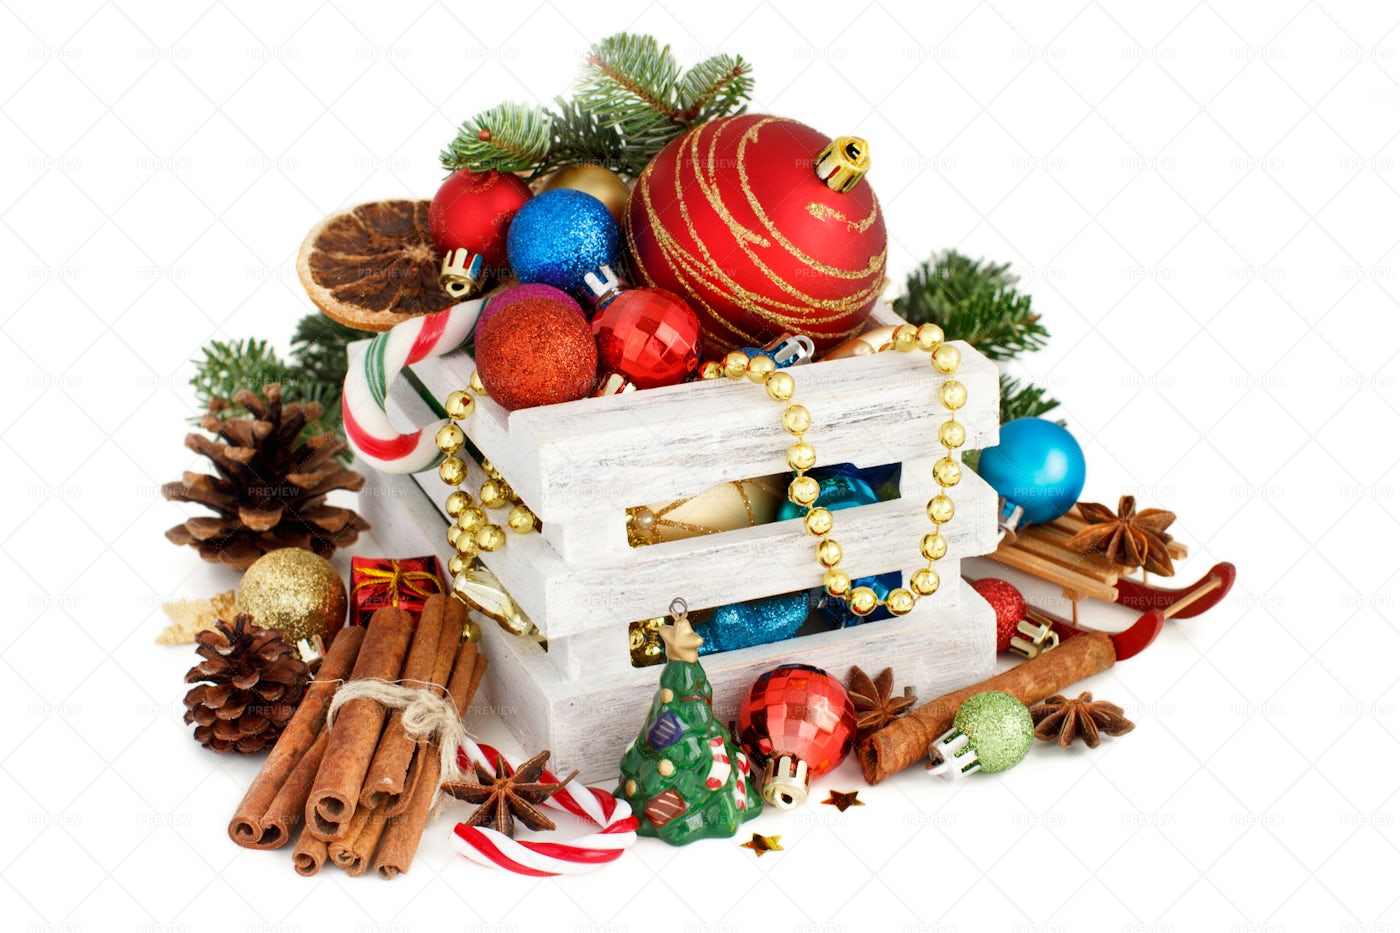 Christmas Composition In Box: Stock Photos